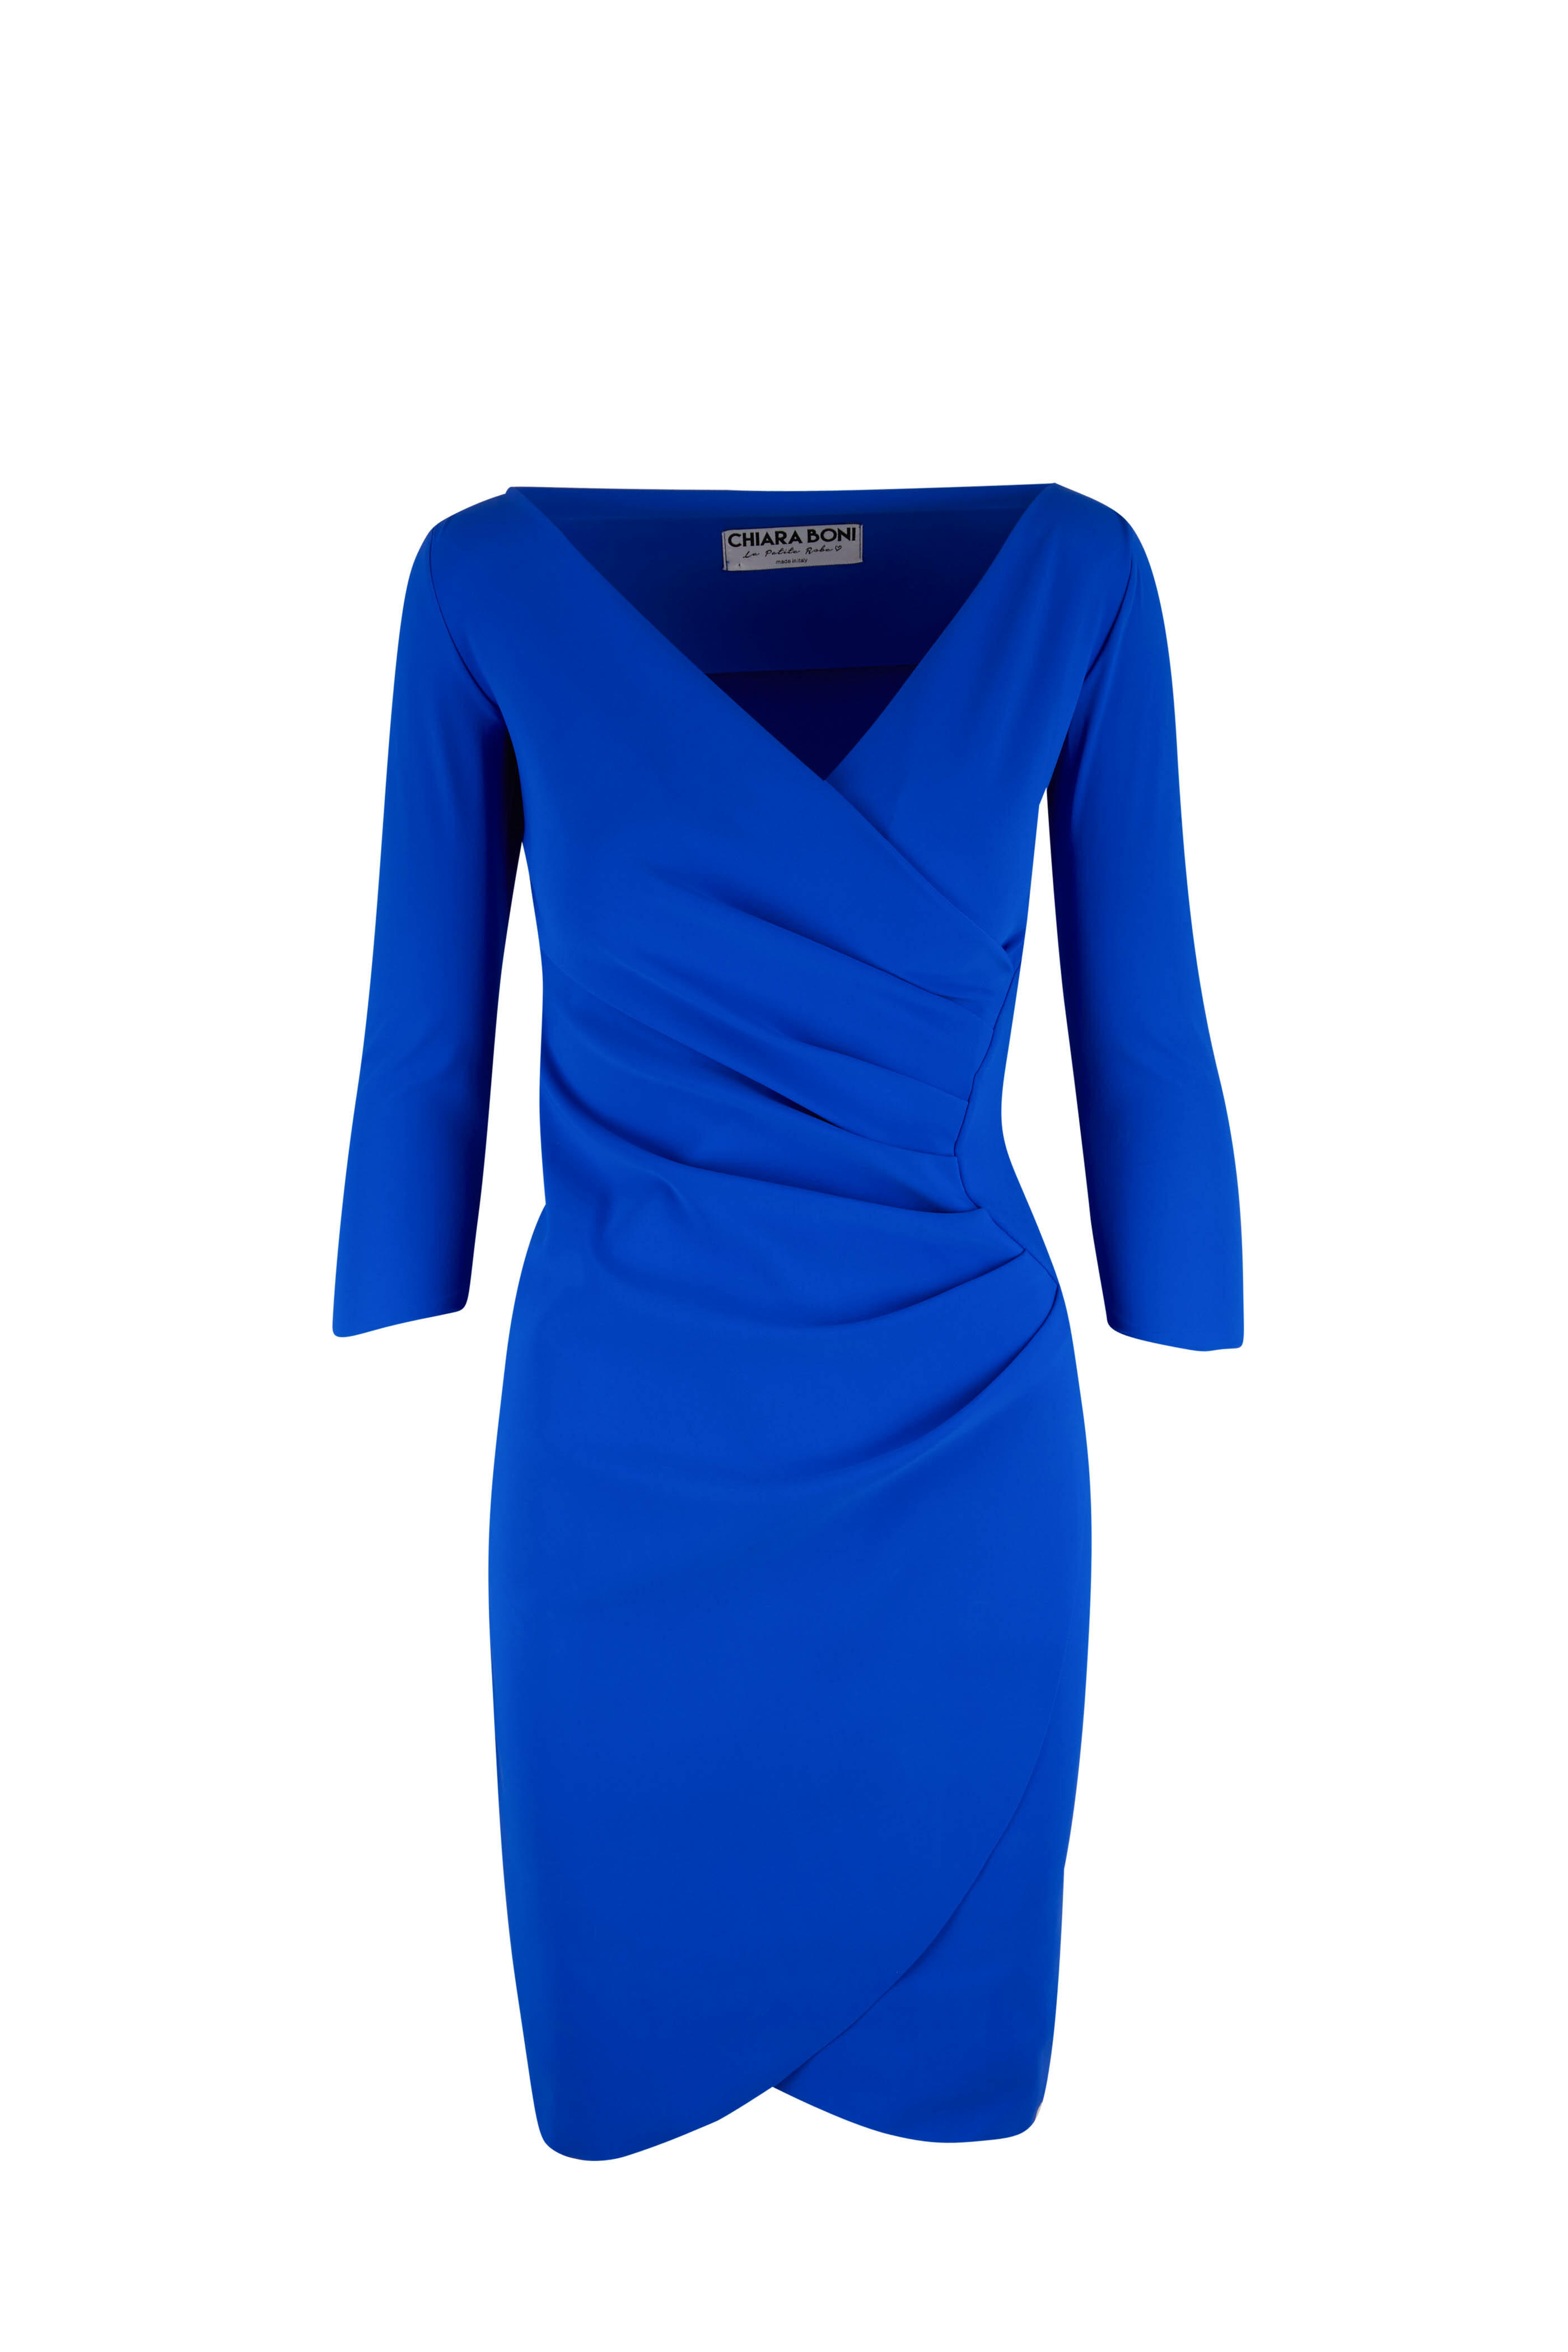 Chiara Blue Thermal Print Dress - DOLCE & DIVA